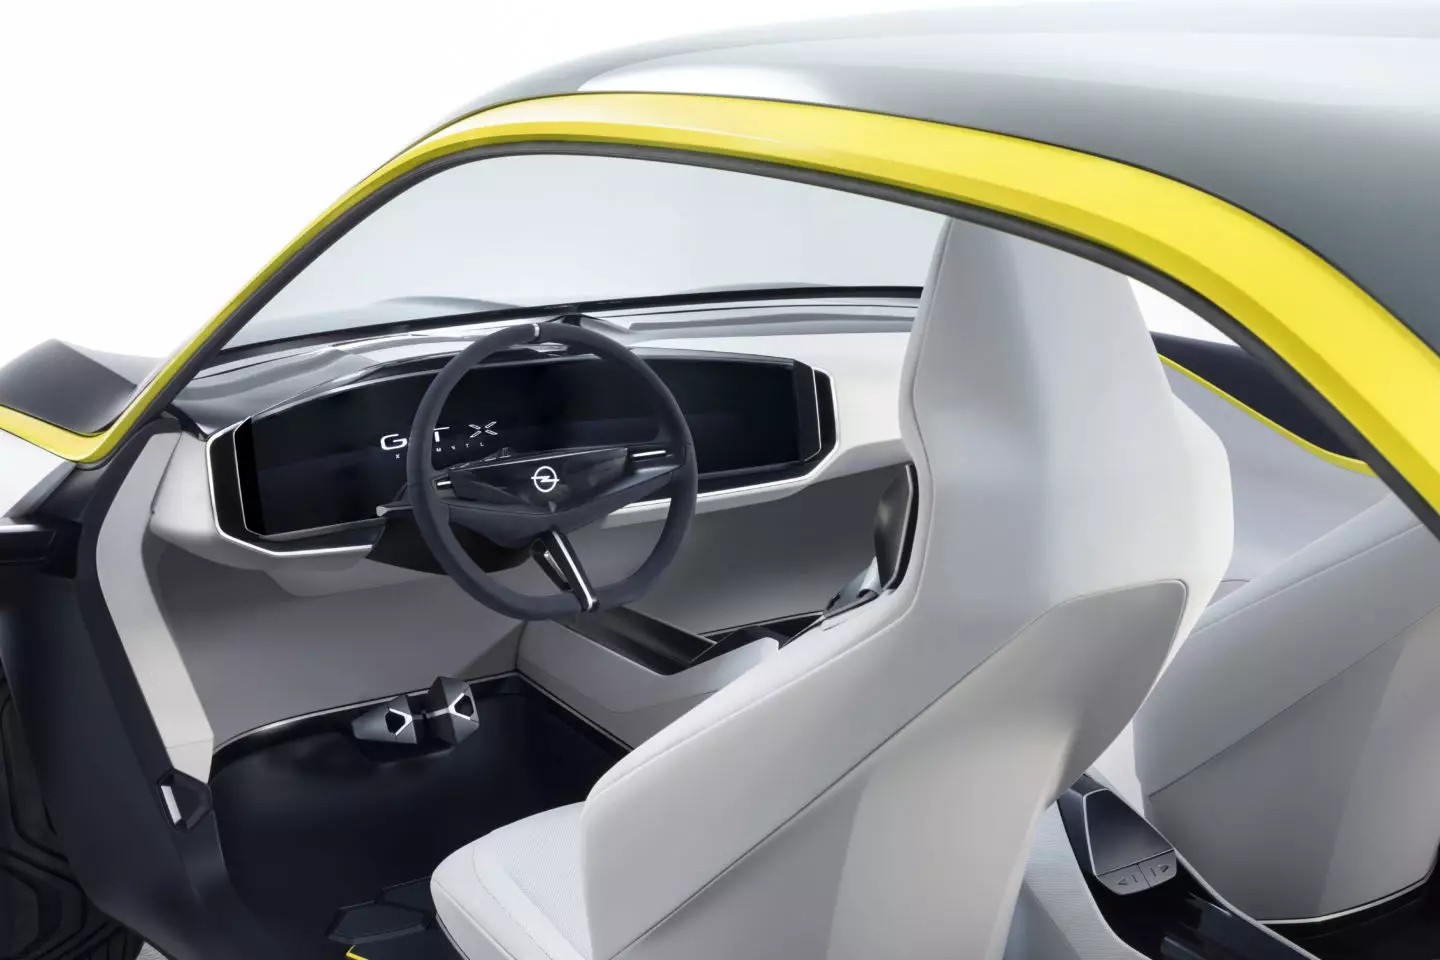 2018 Opel GT X စမ်းသပ်မှု